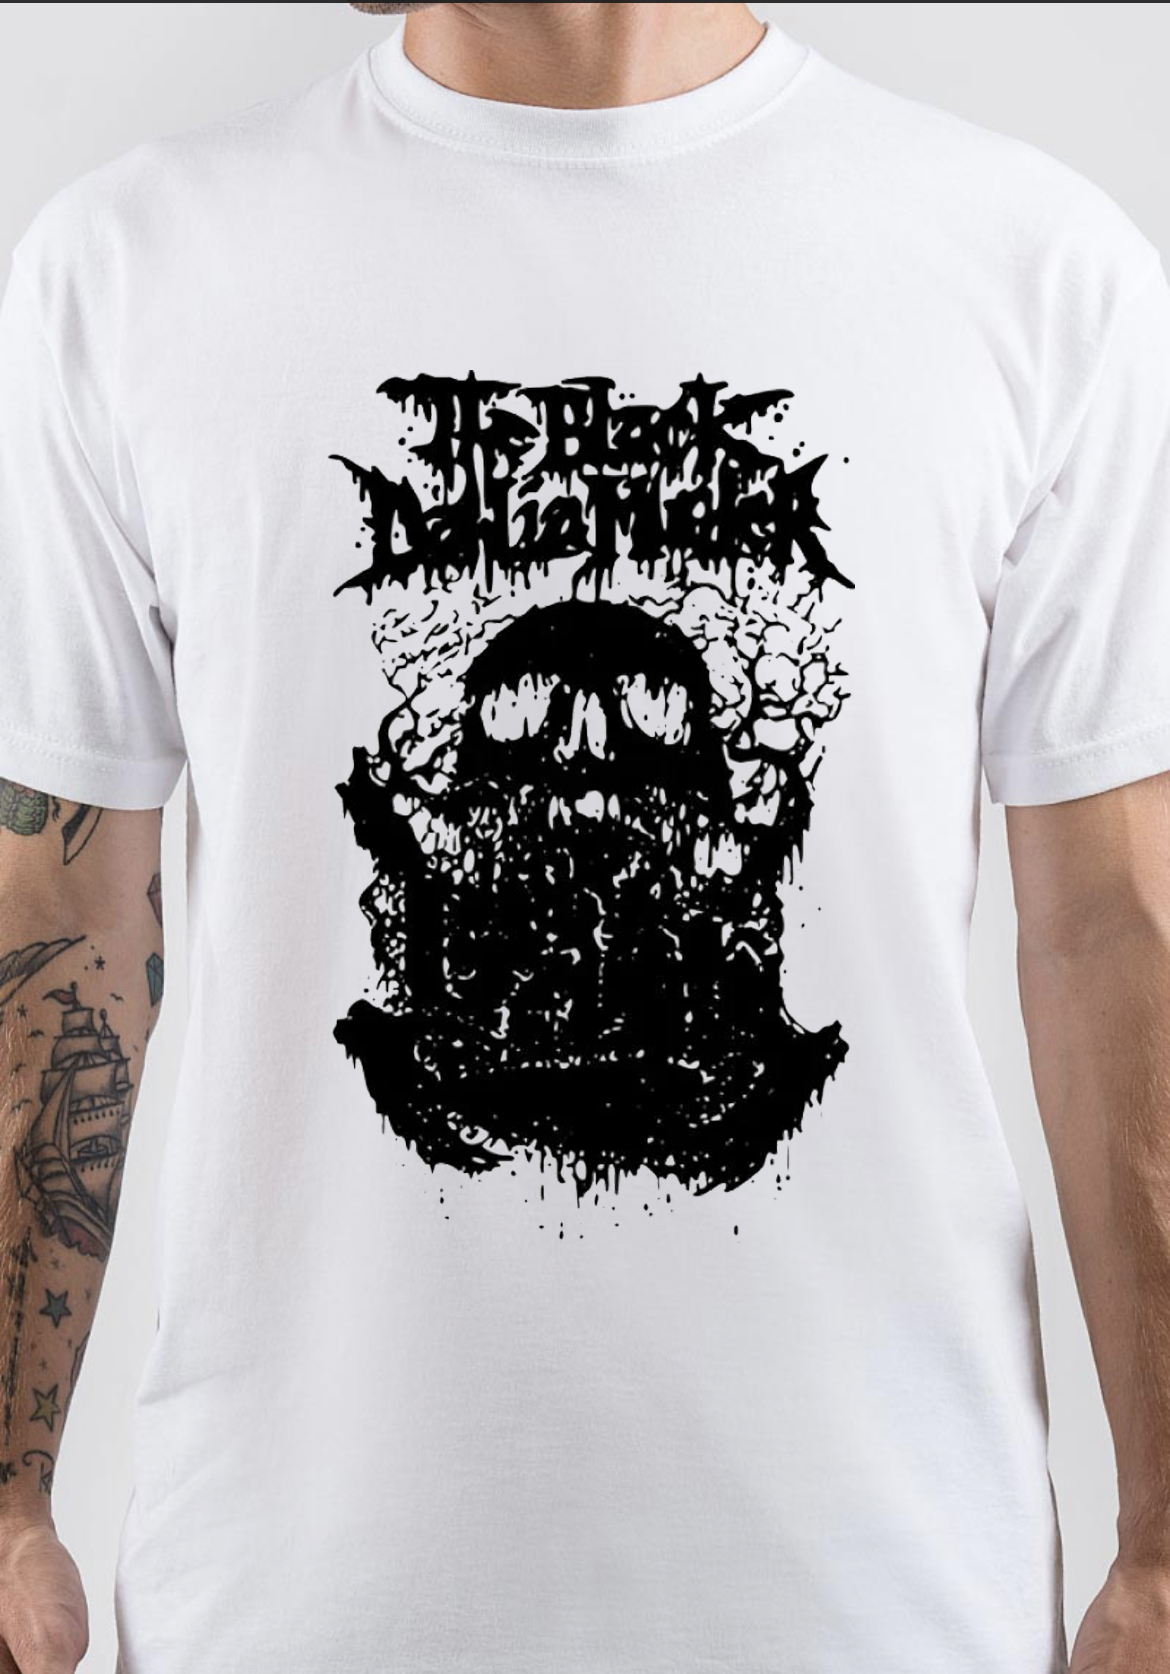 The Black Dahlia Murder T-Shirt And Merchandise